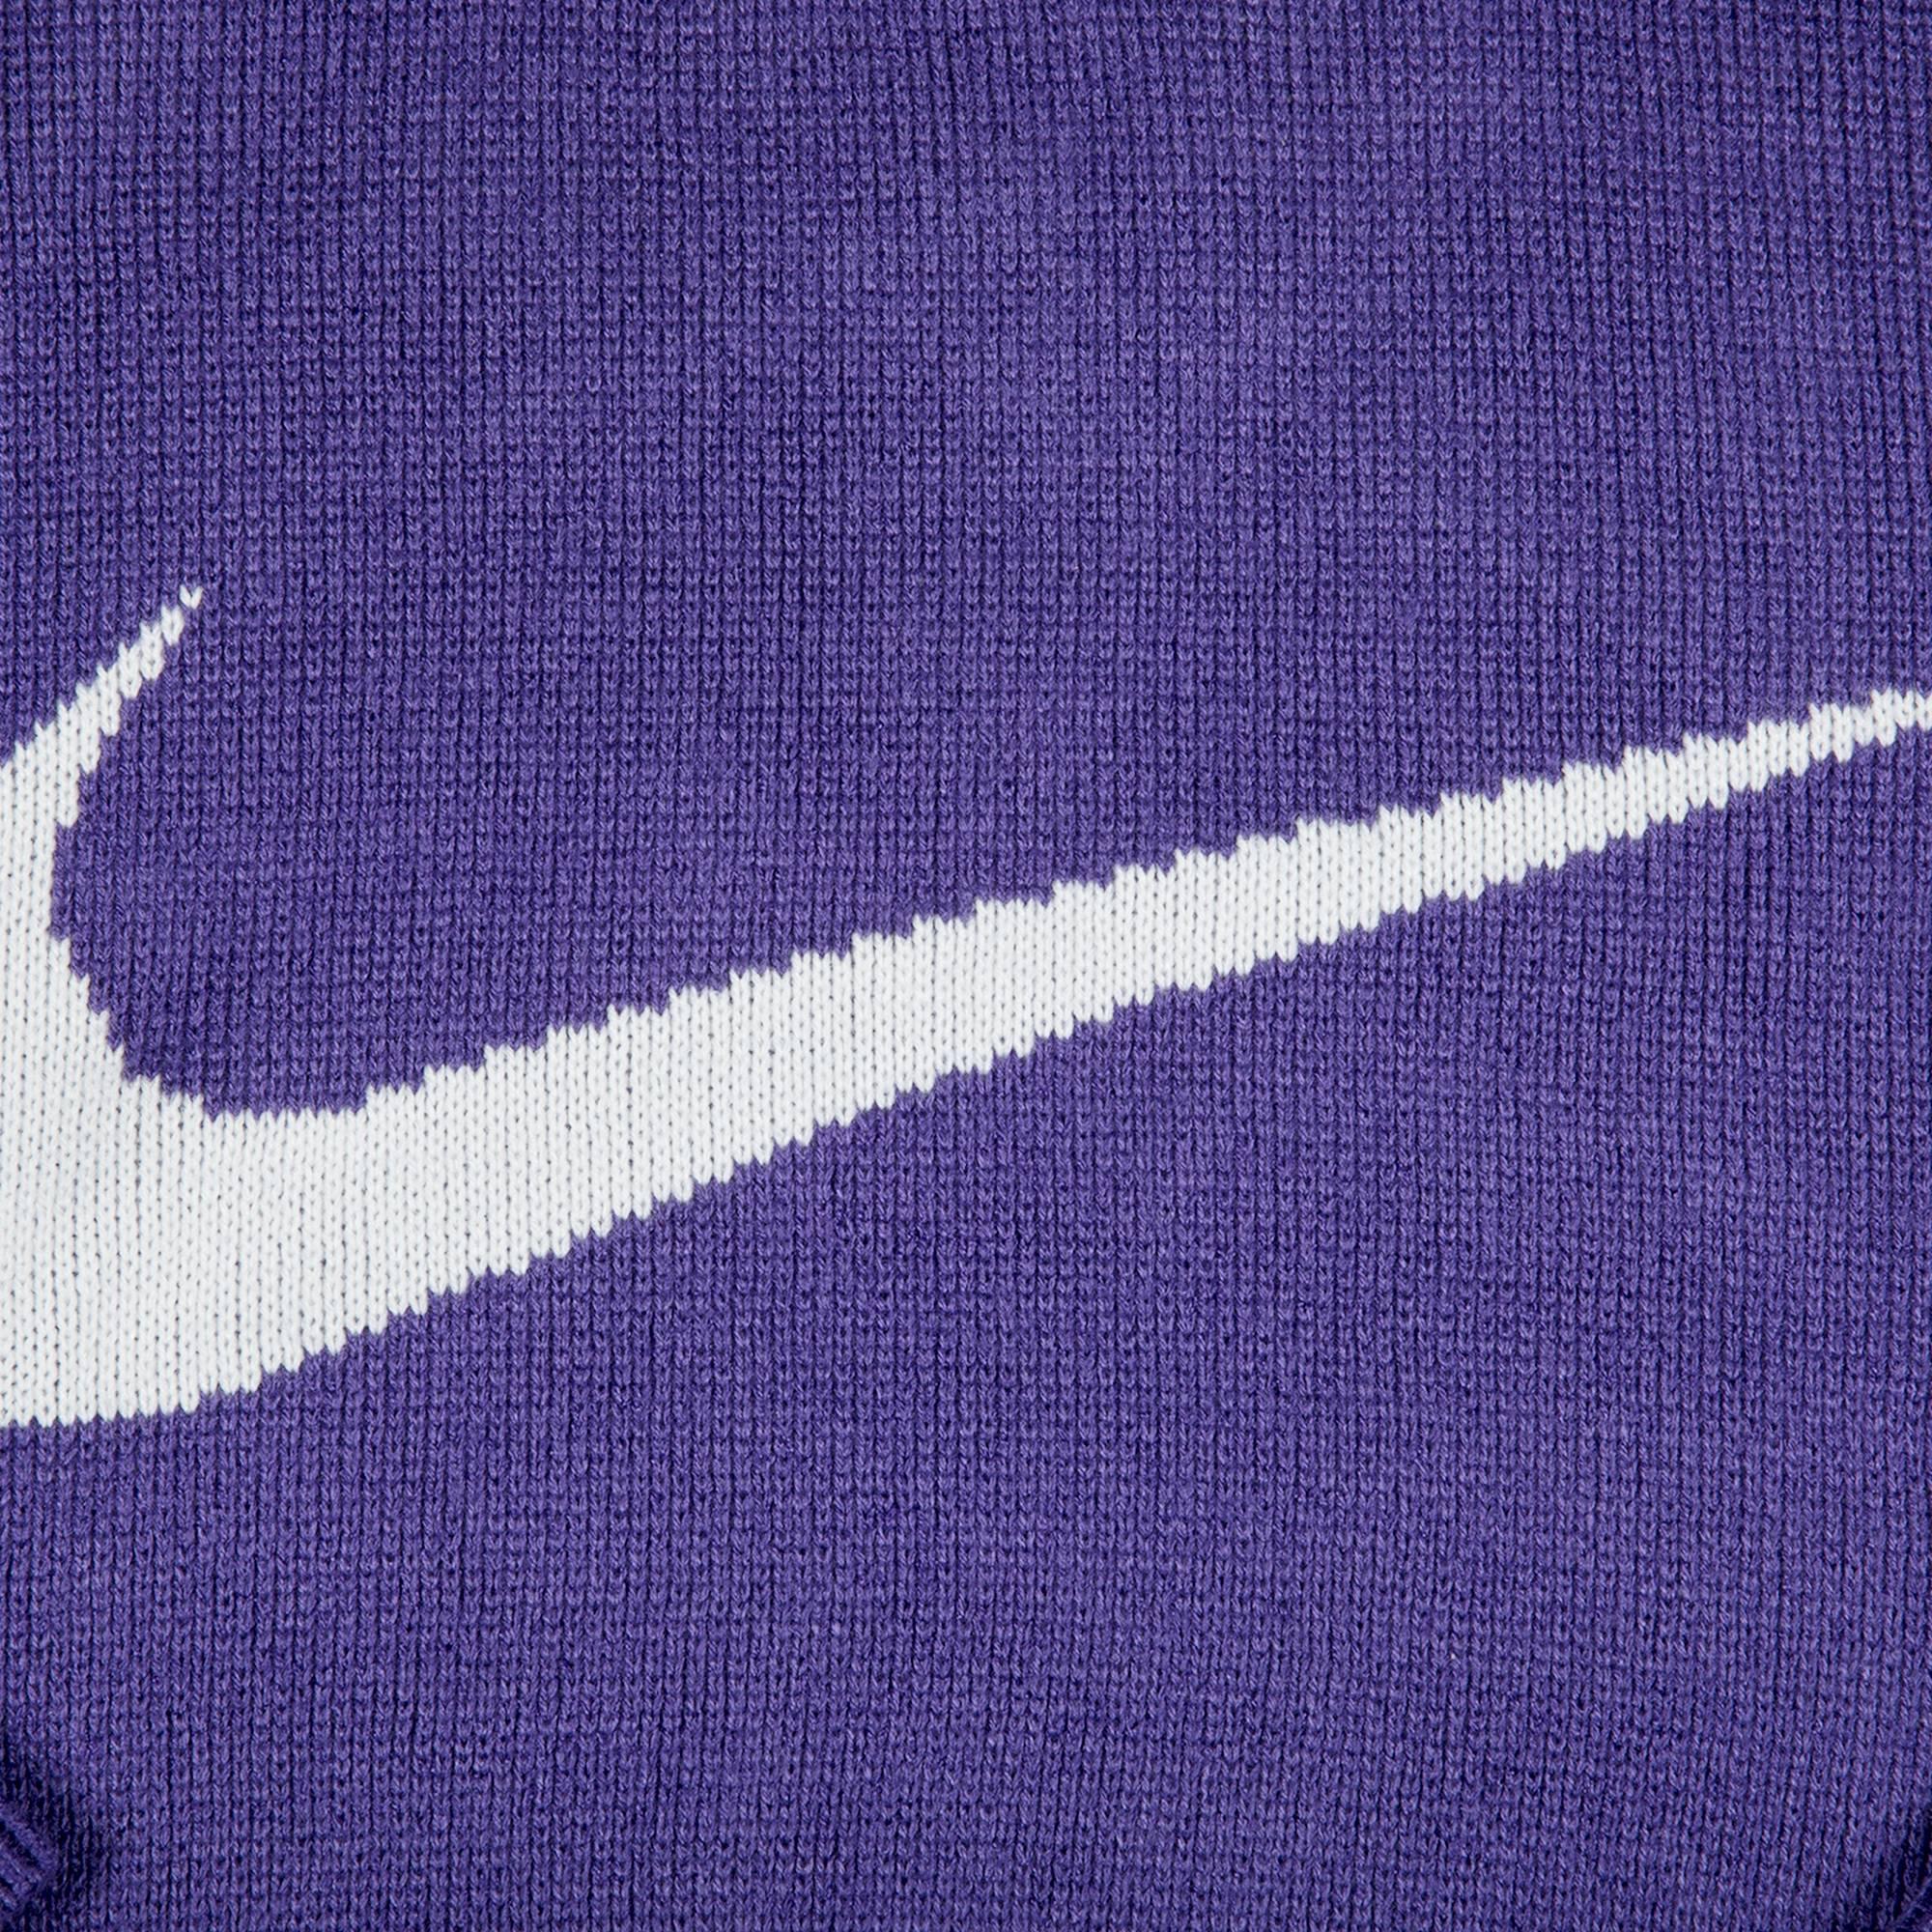 Supreme X Nike Swoosh Sweater 'purple' for Men | Lyst